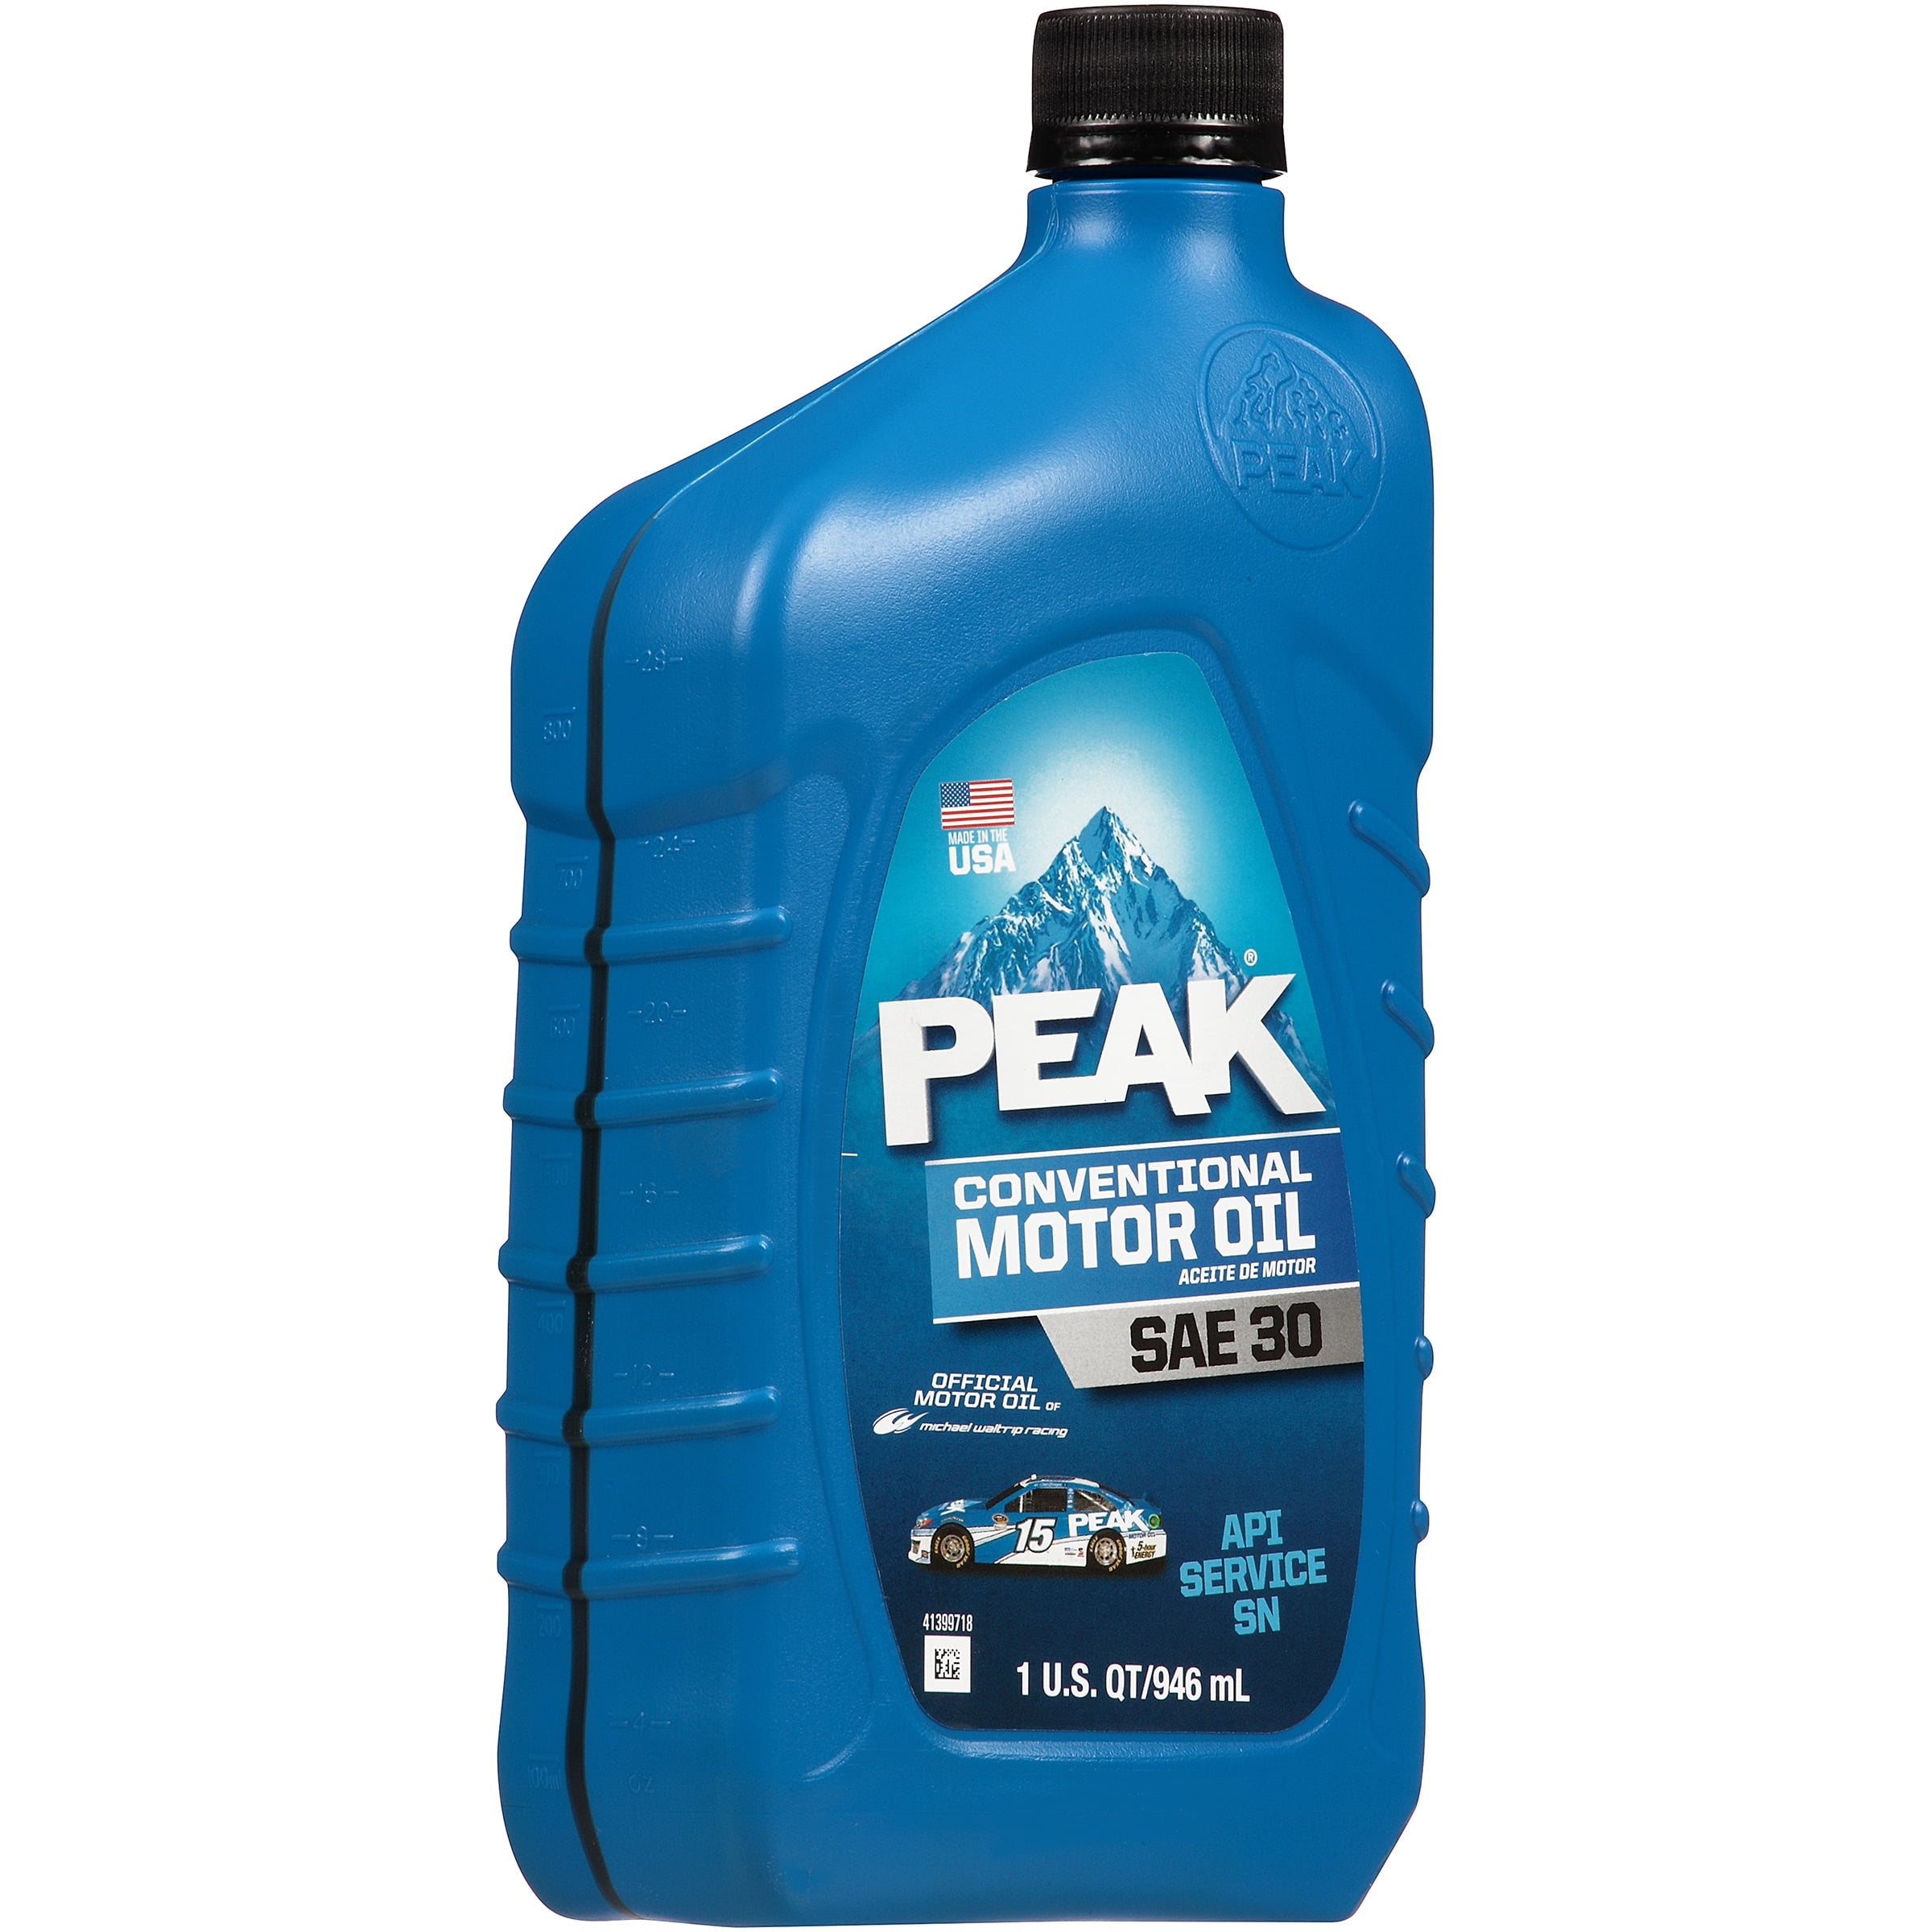 peak-sae-10w-40-conventional-motor-oil-1-qt-bottle-walmart